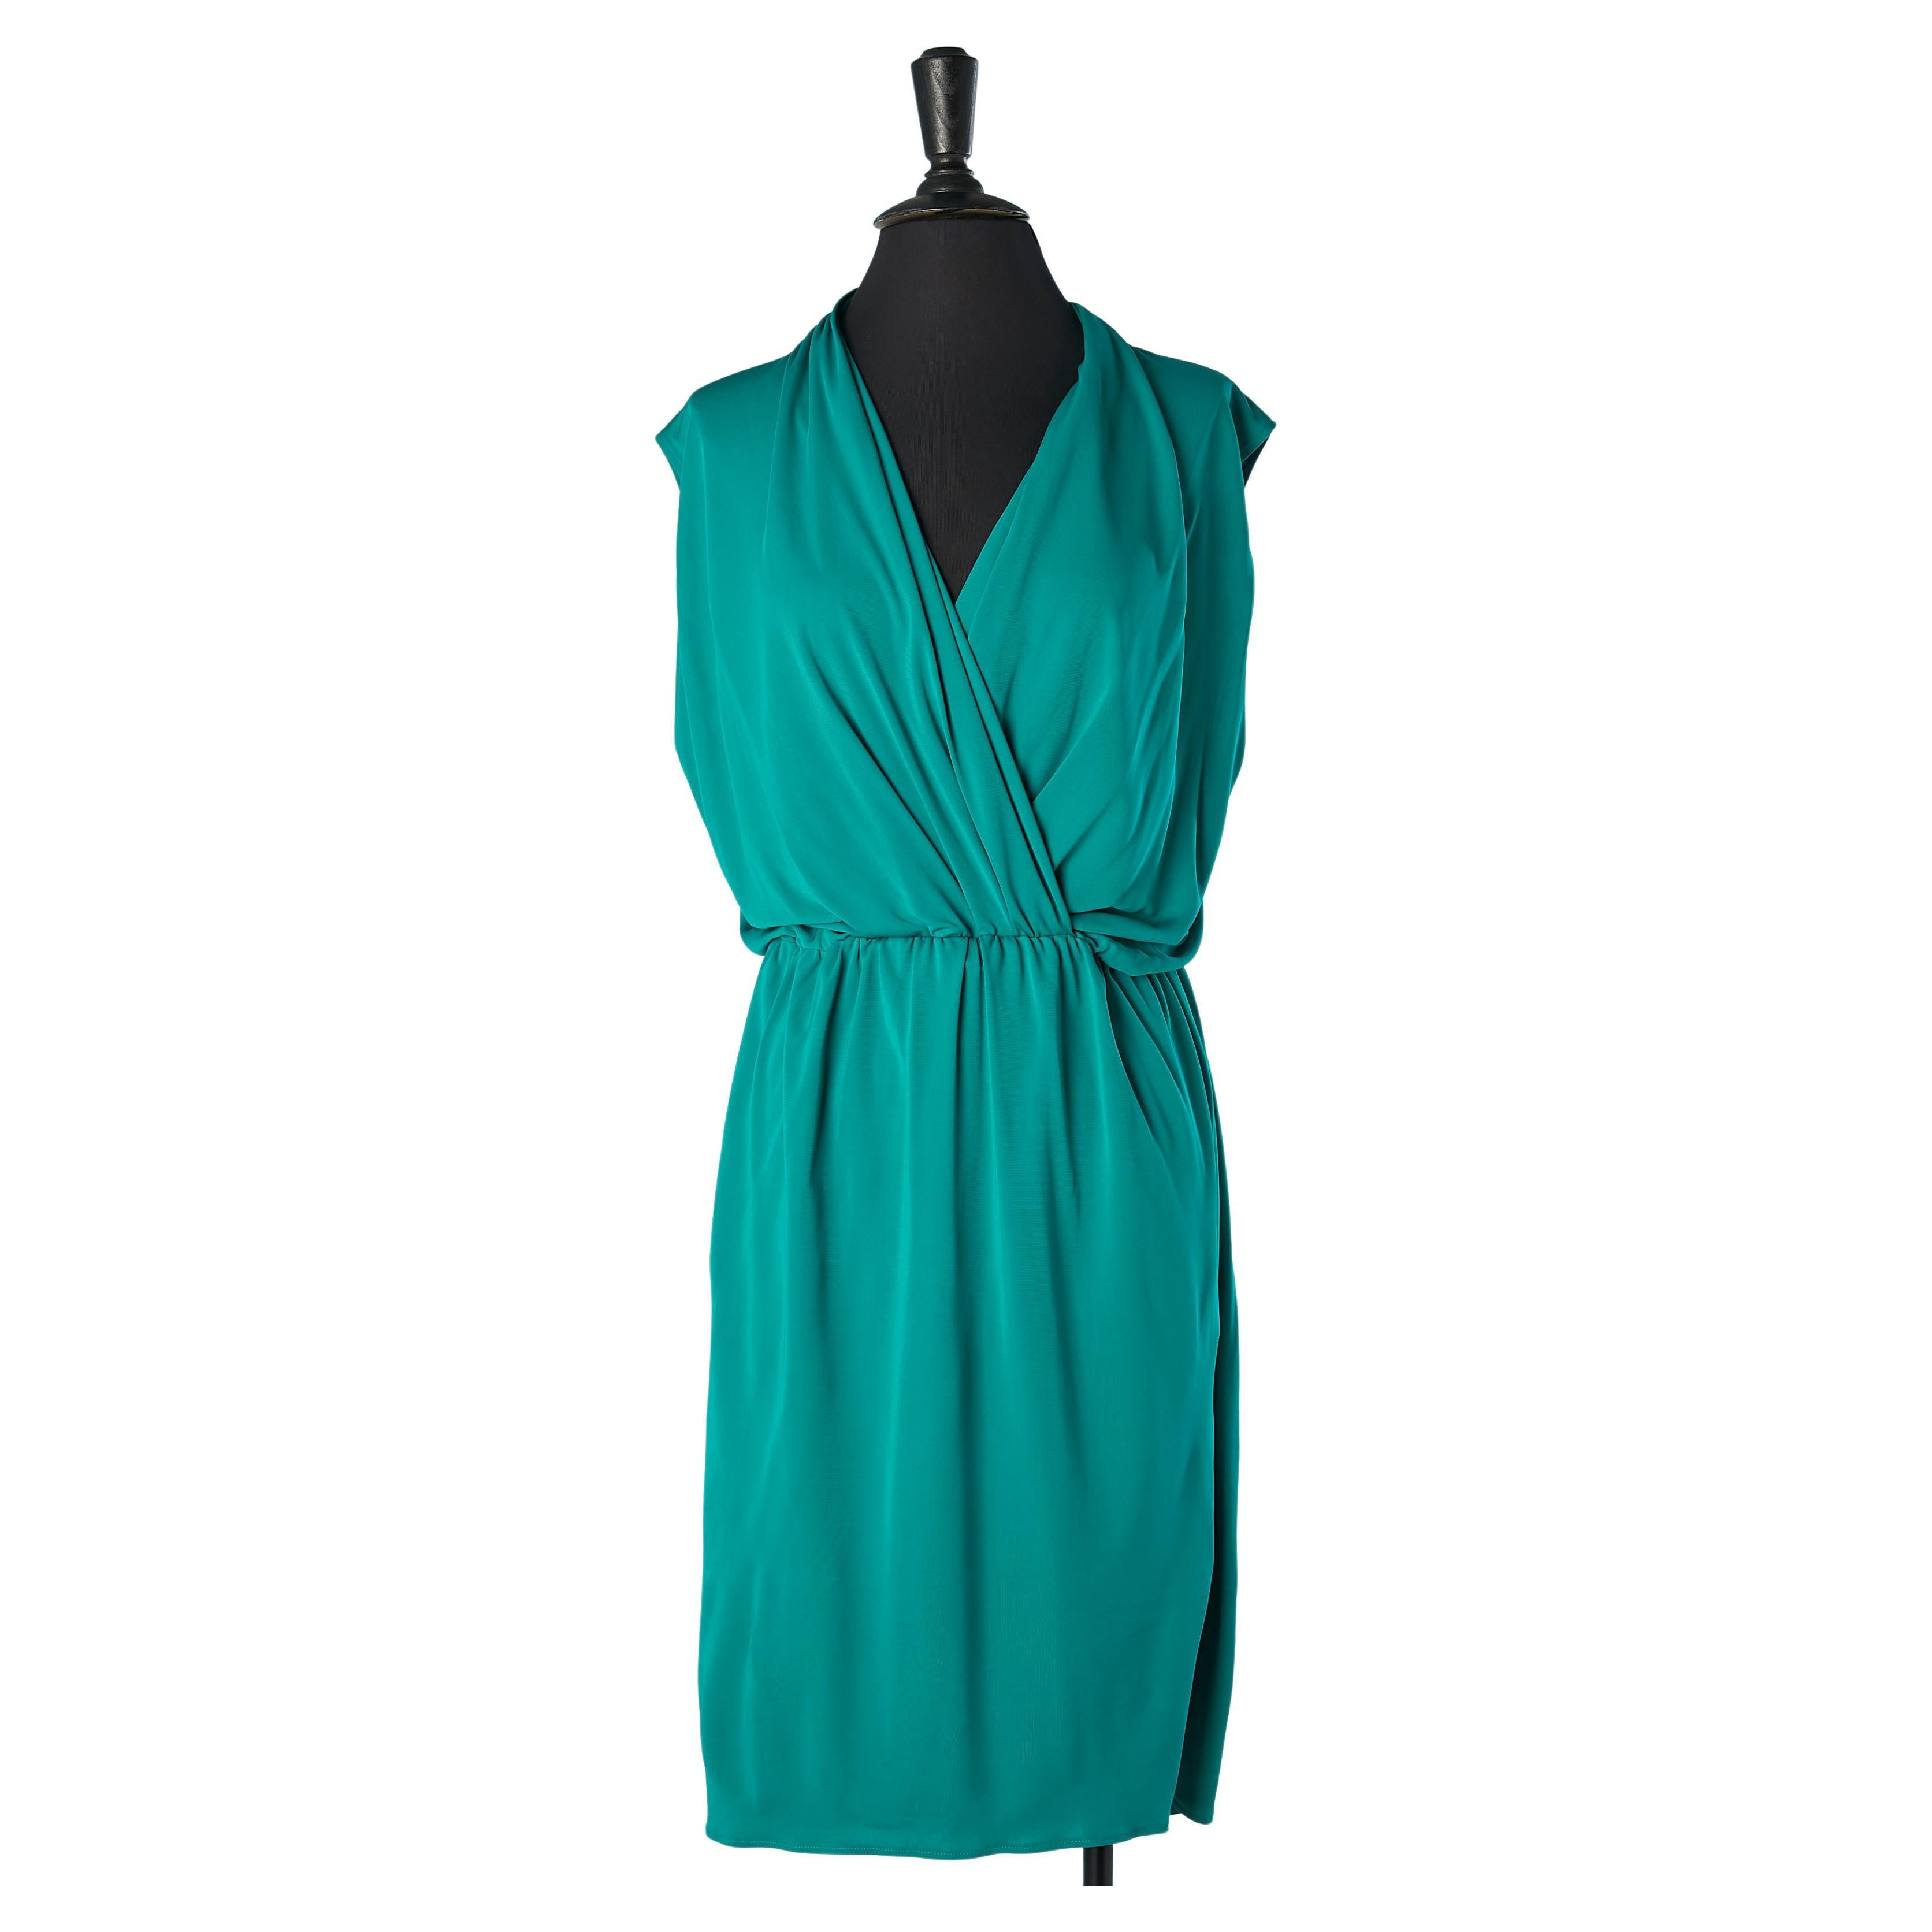 Emerald green rayon draped cocktail dress Lanvin par Alber Elbaz  For Sale